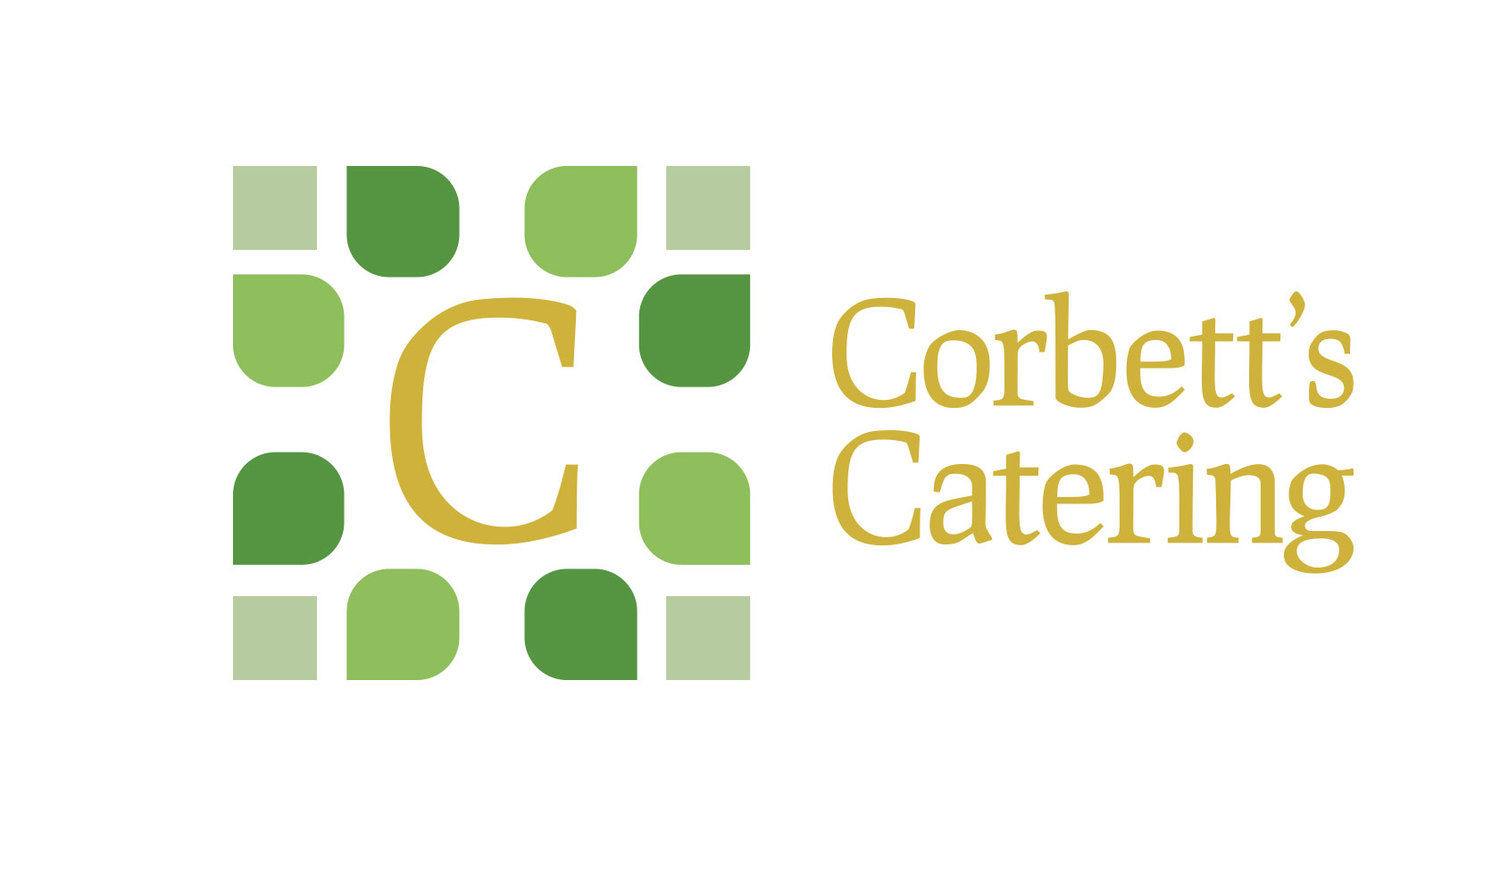 Corbett's Catering